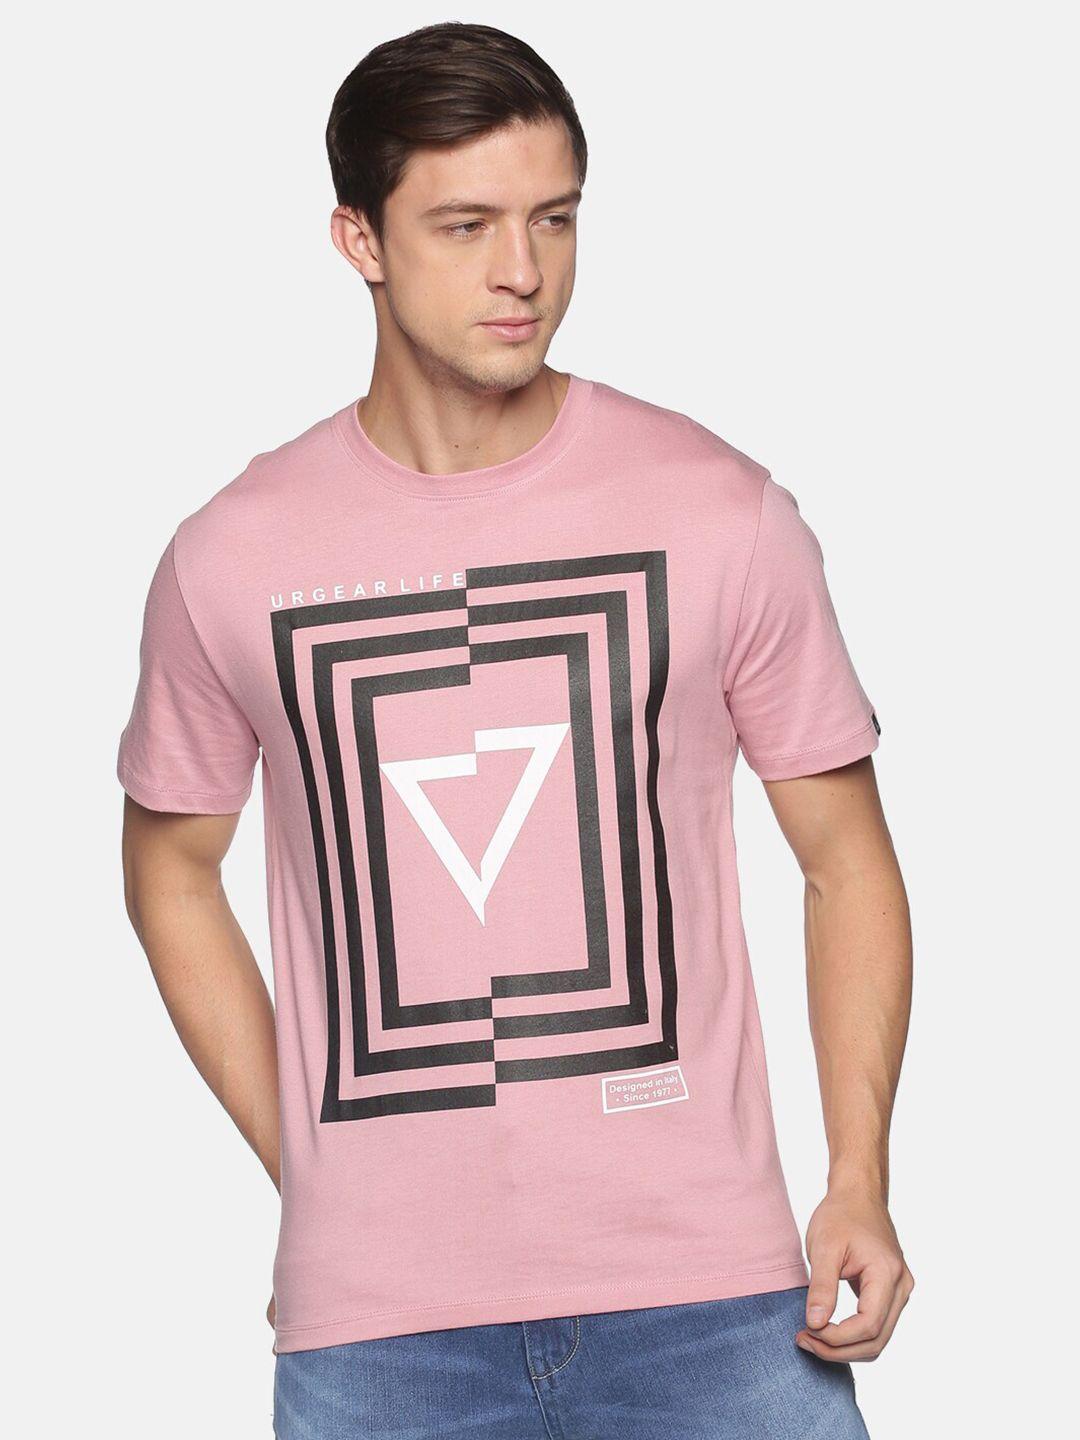 urgear men pink printed t-shirt